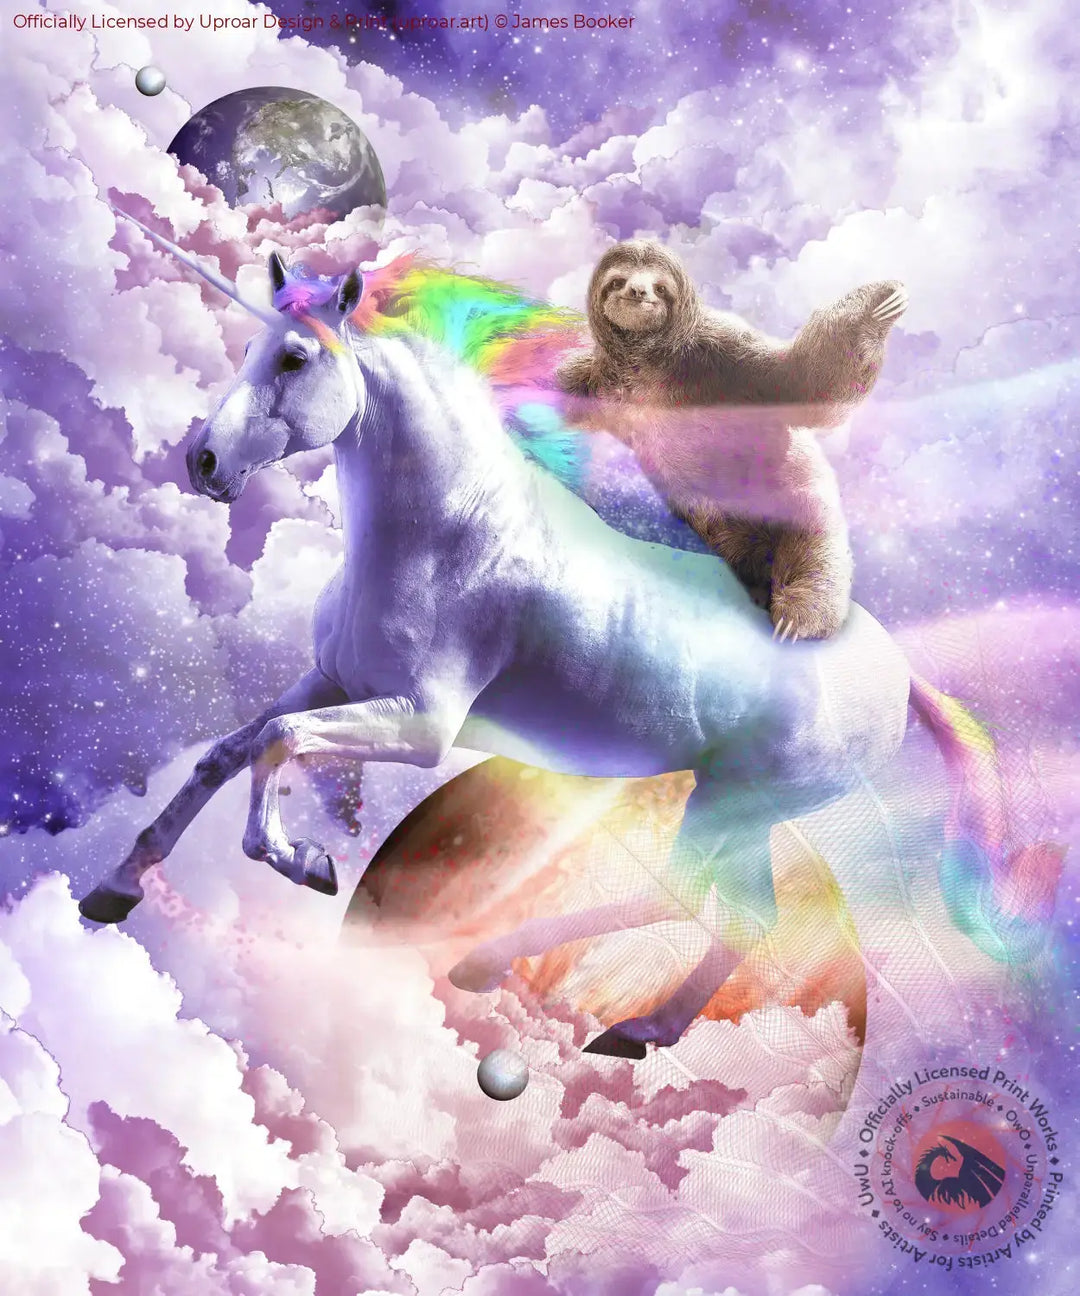 Epic Space Sloth Riding On Unicorn Posters Prints & Visual Artwork